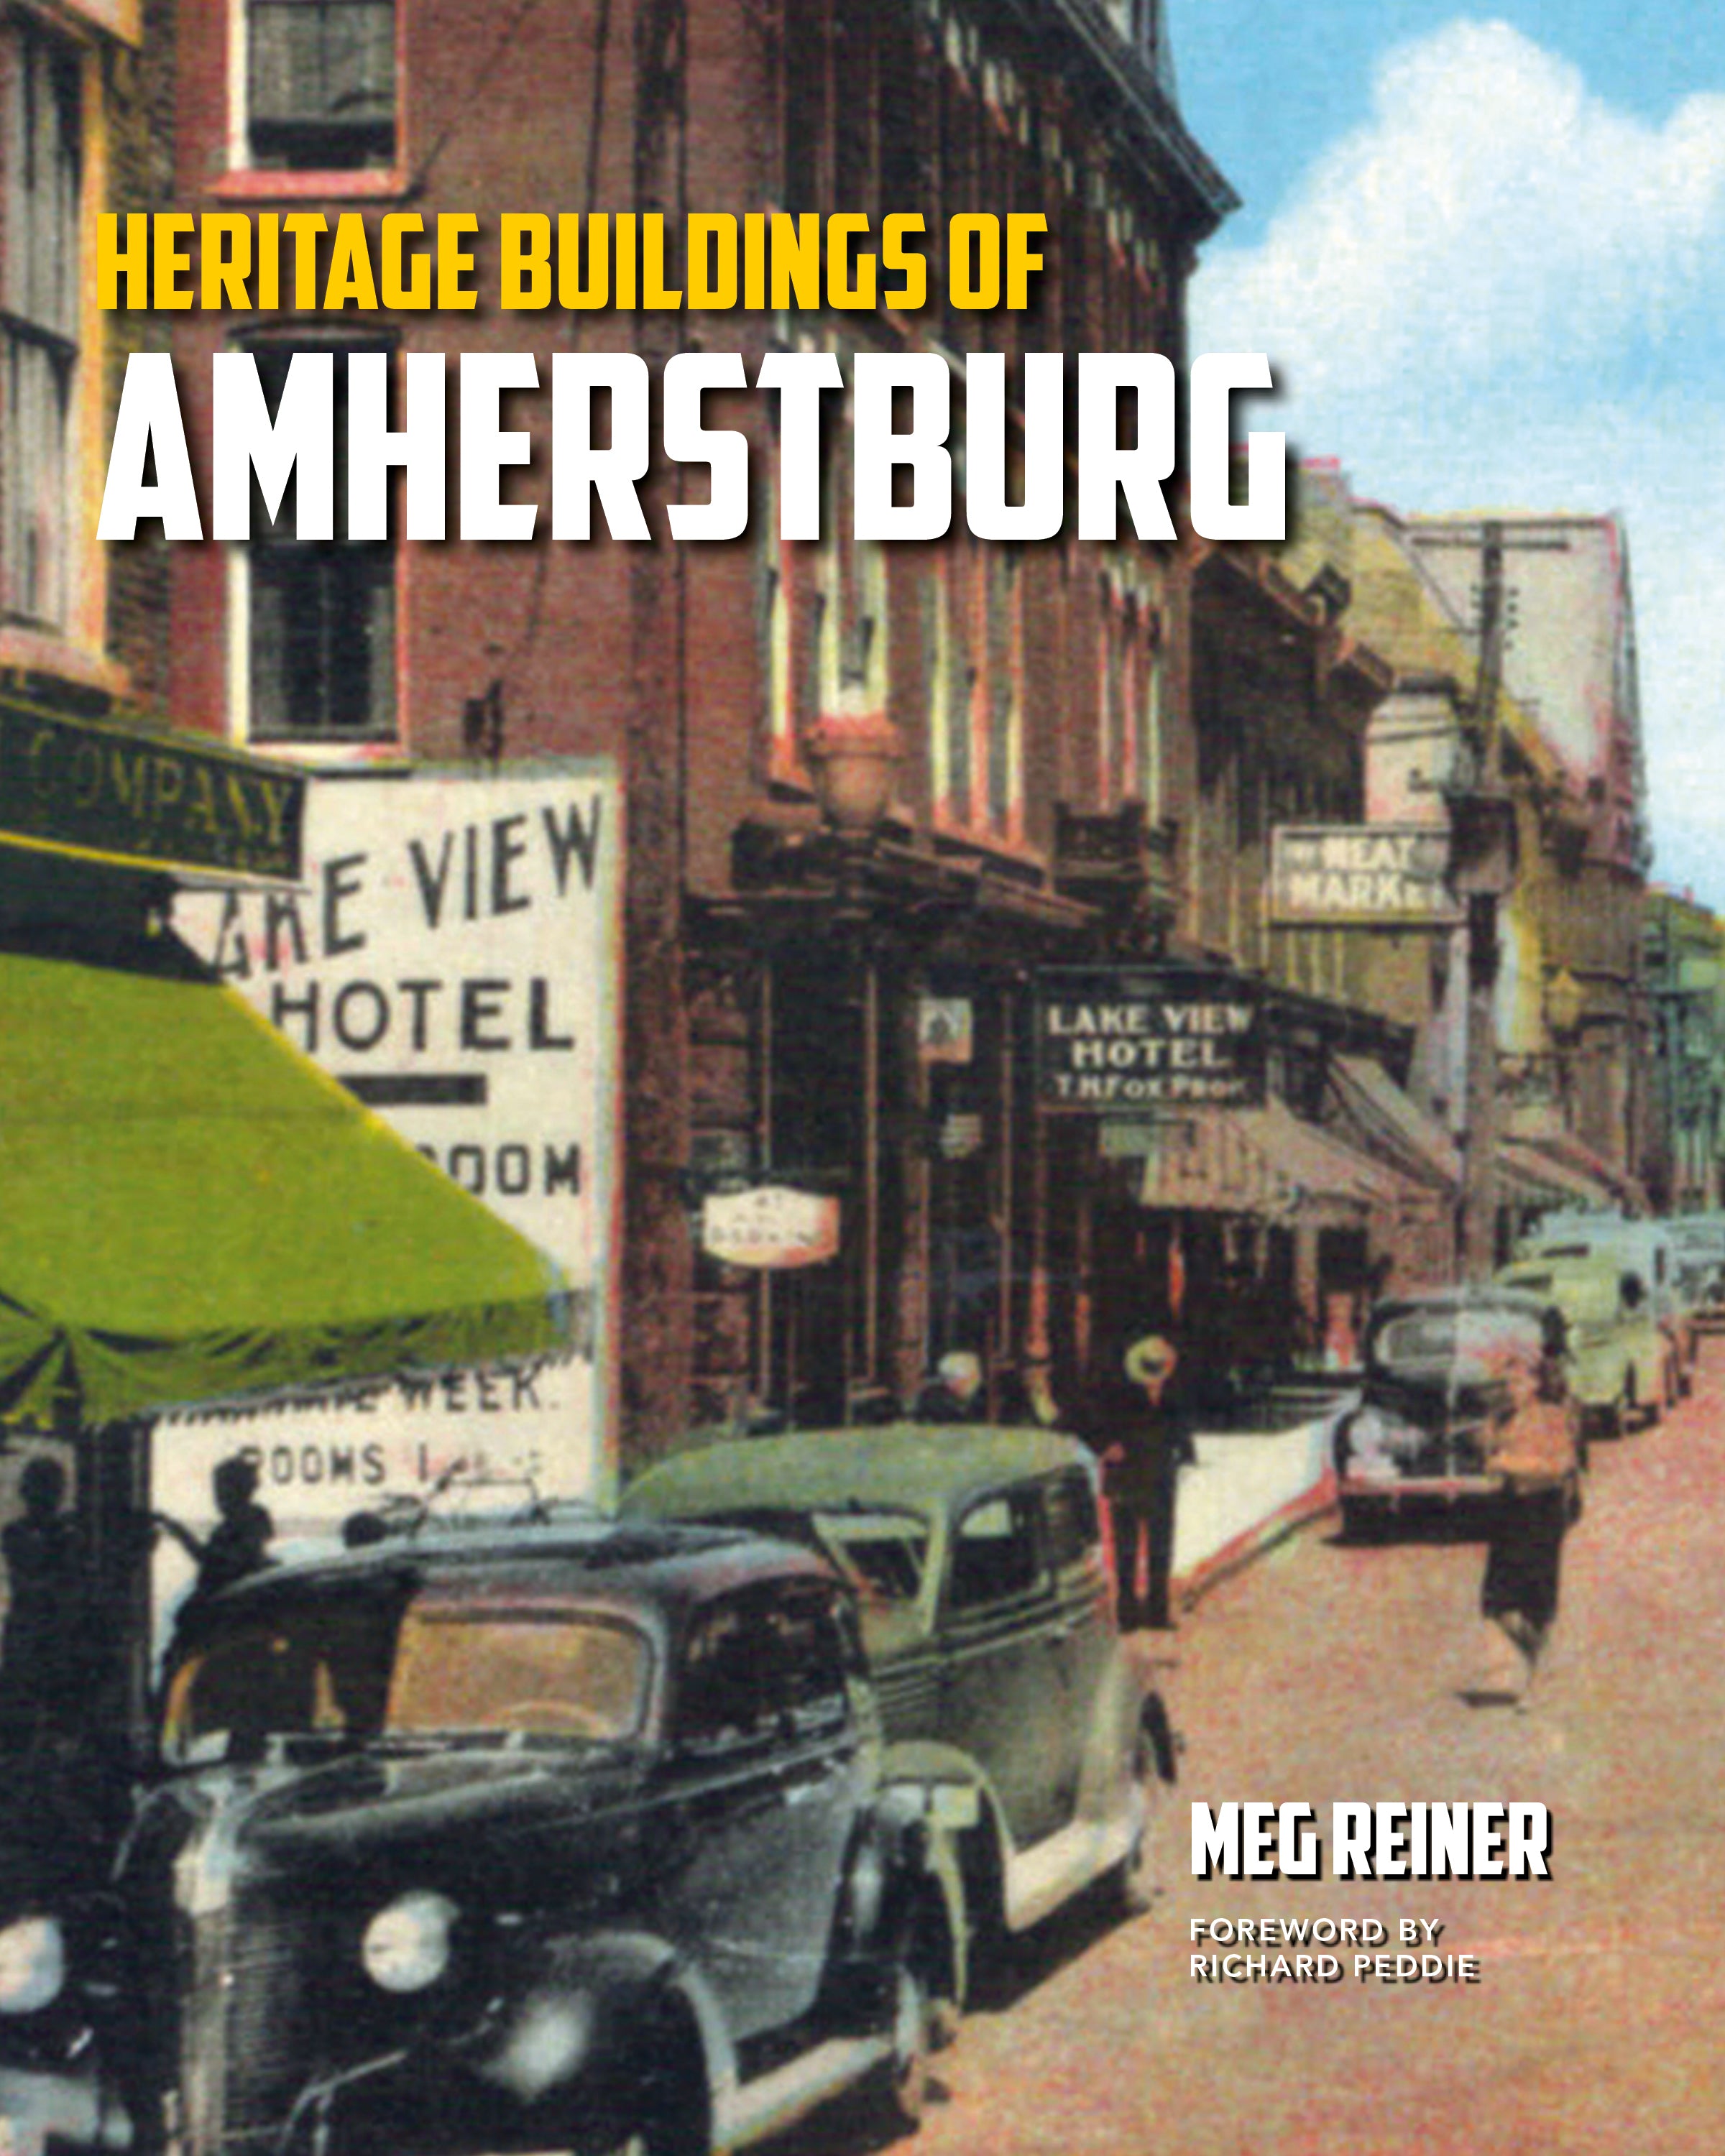 Introducing: Heritage Buildings of Amherstburg